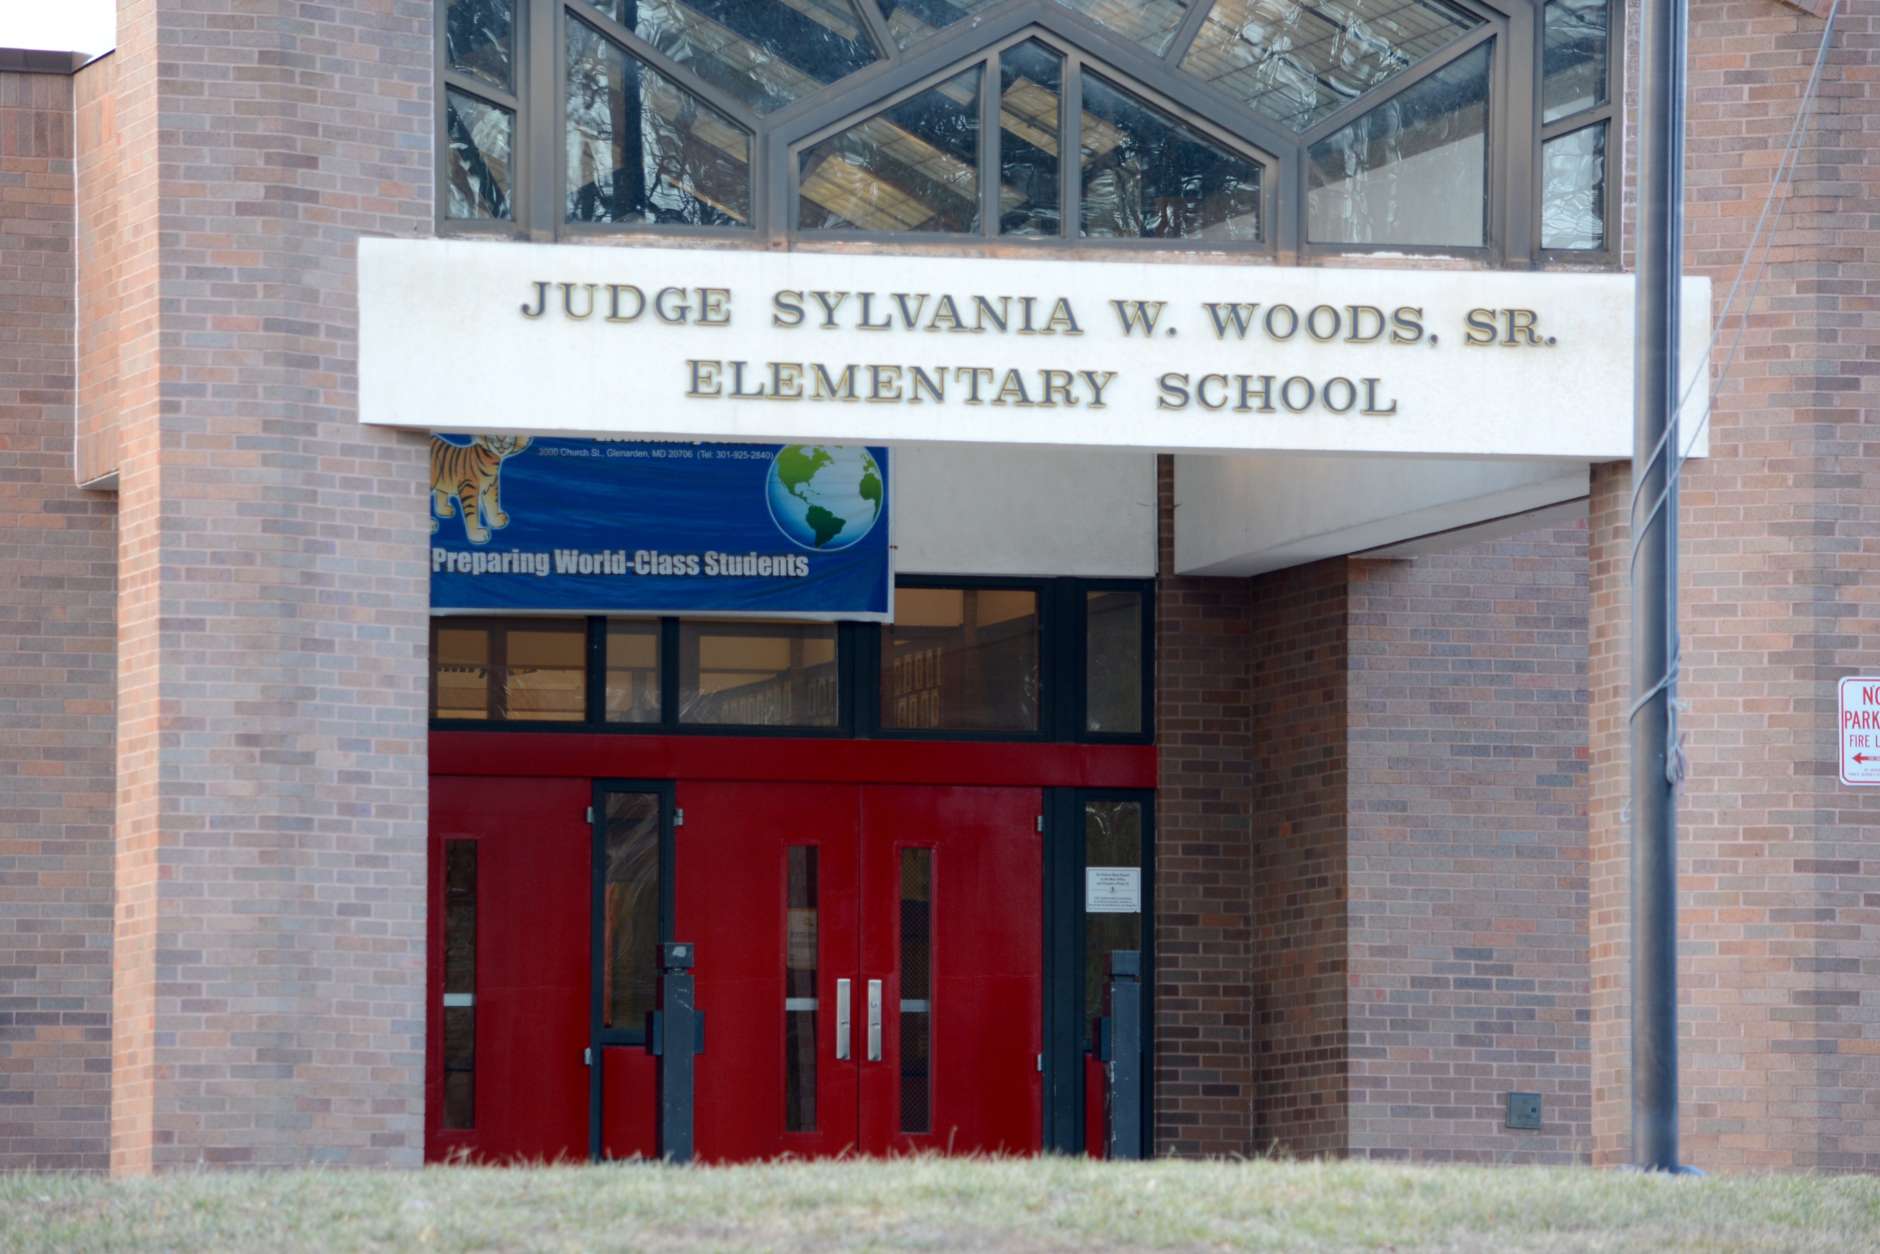 FILE -- The Judge Sylvania W. Woods Elementary School, in Glenarden, Maryland. (WTOP/Dave Dildine, File)